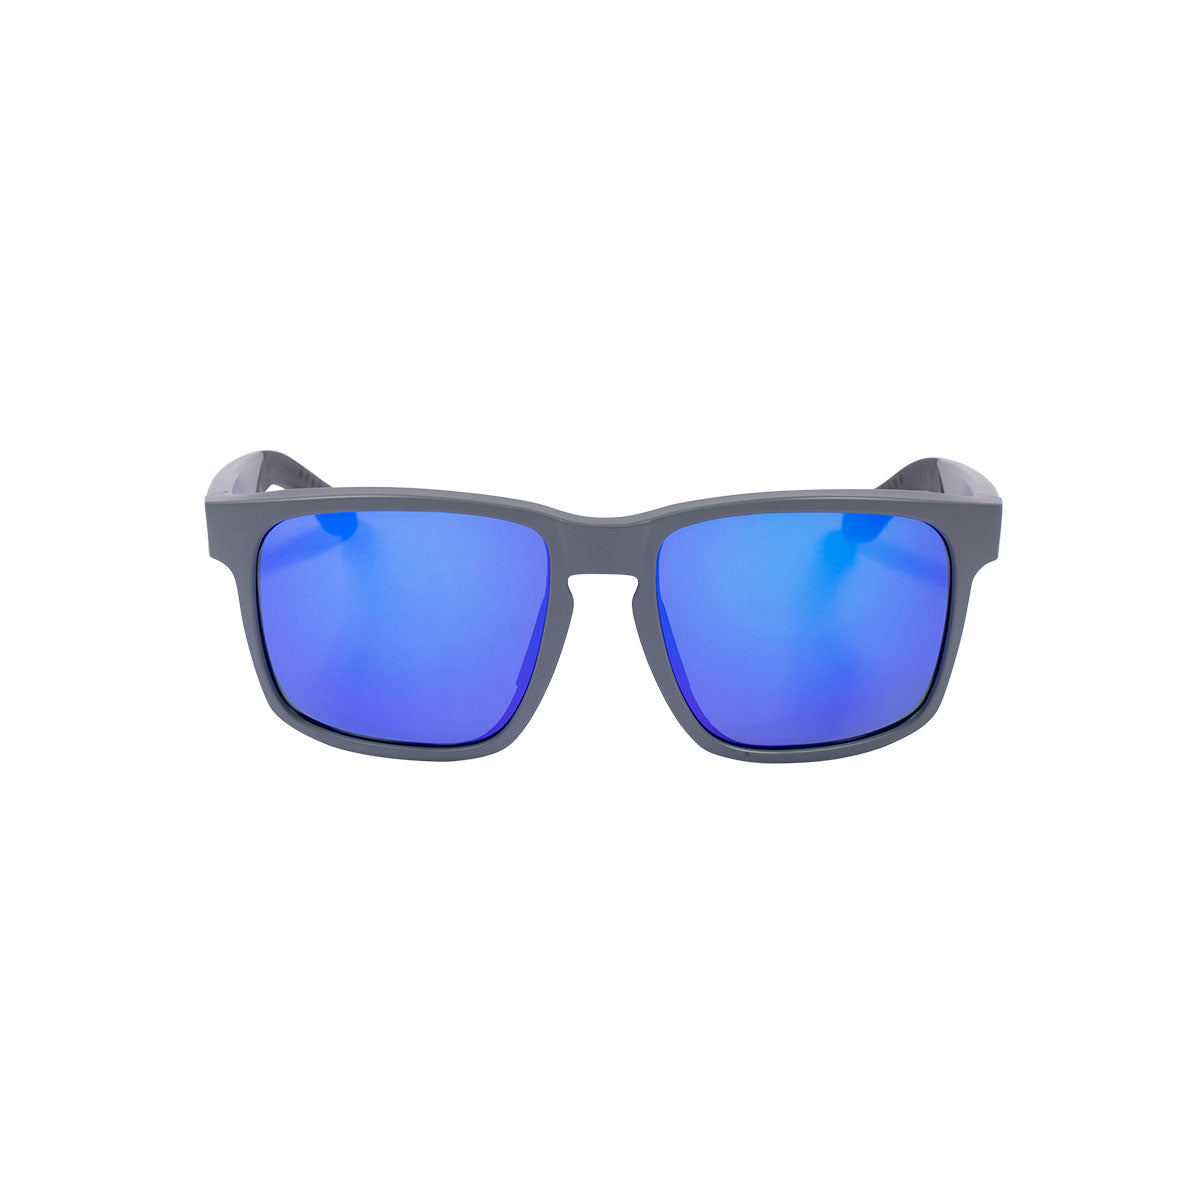 Key West R1 Lifestyle Sunglasses by Optics XX2i